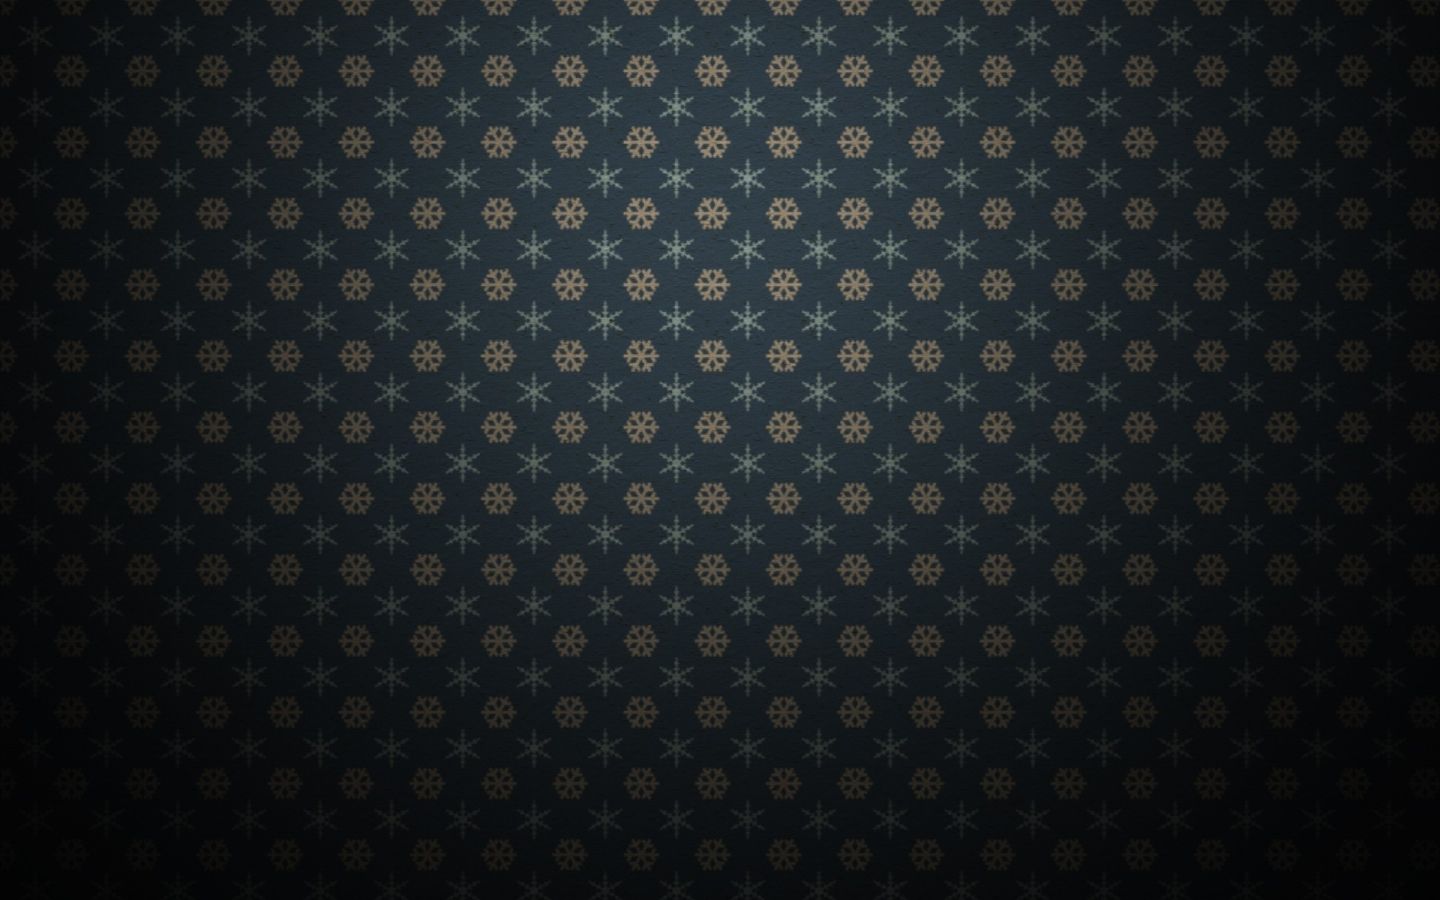 Minimalistic pattern background Mac Wallpaper Download | Free Mac ...